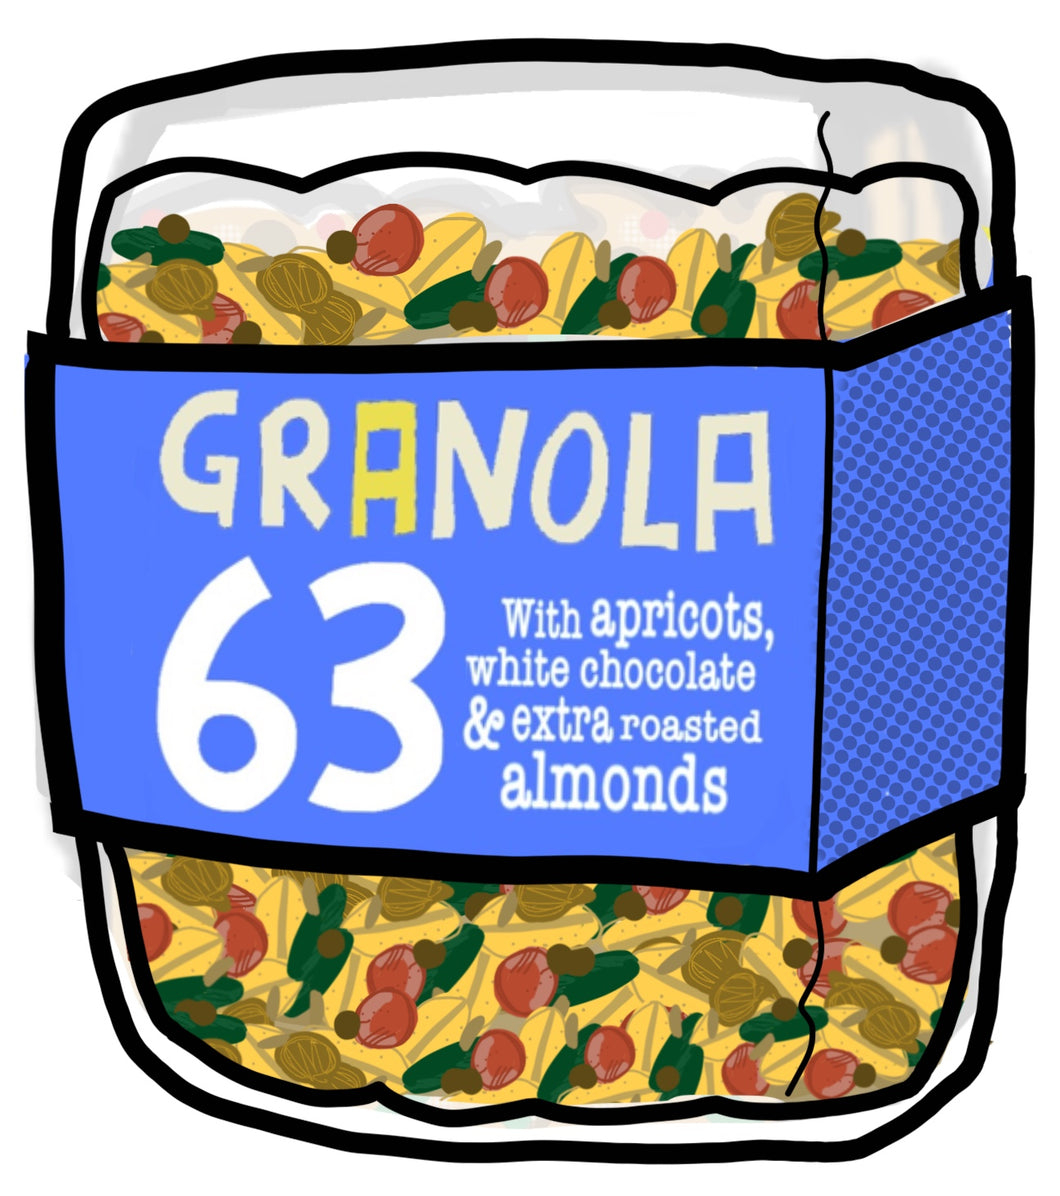 Granola 63